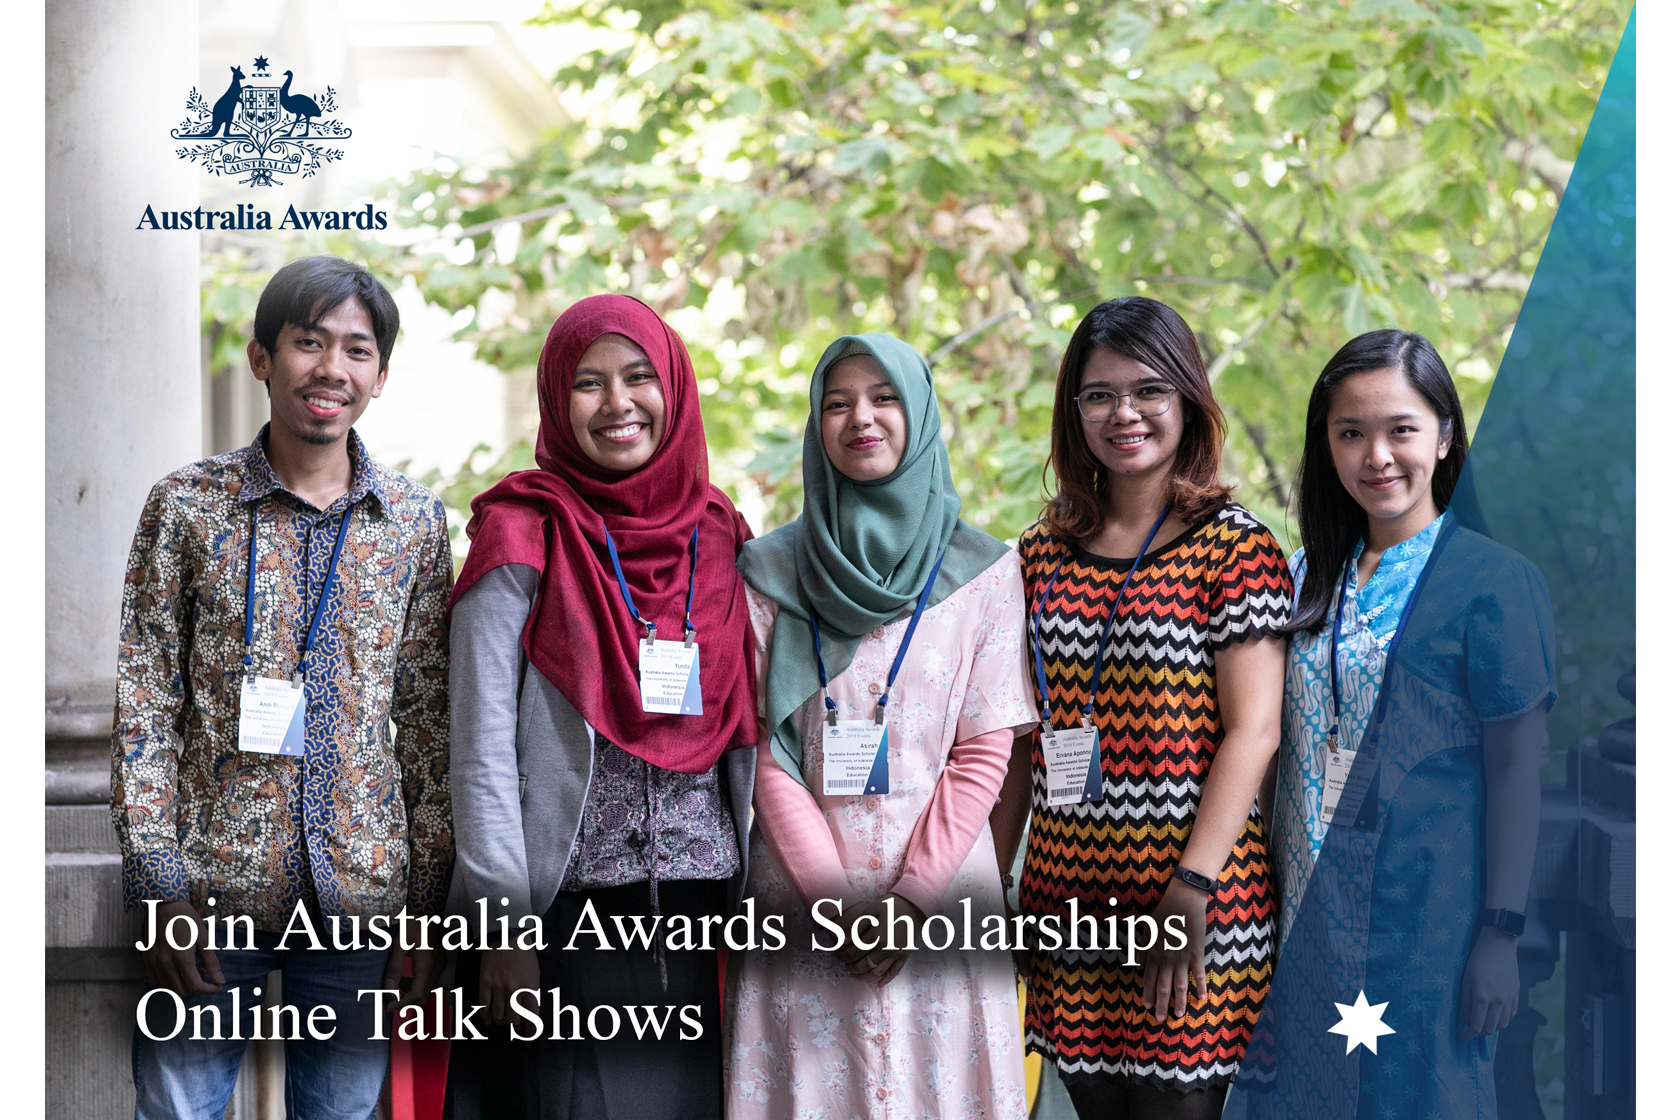 Join Australia Awards Scholarships Online Talk Shows for the Public